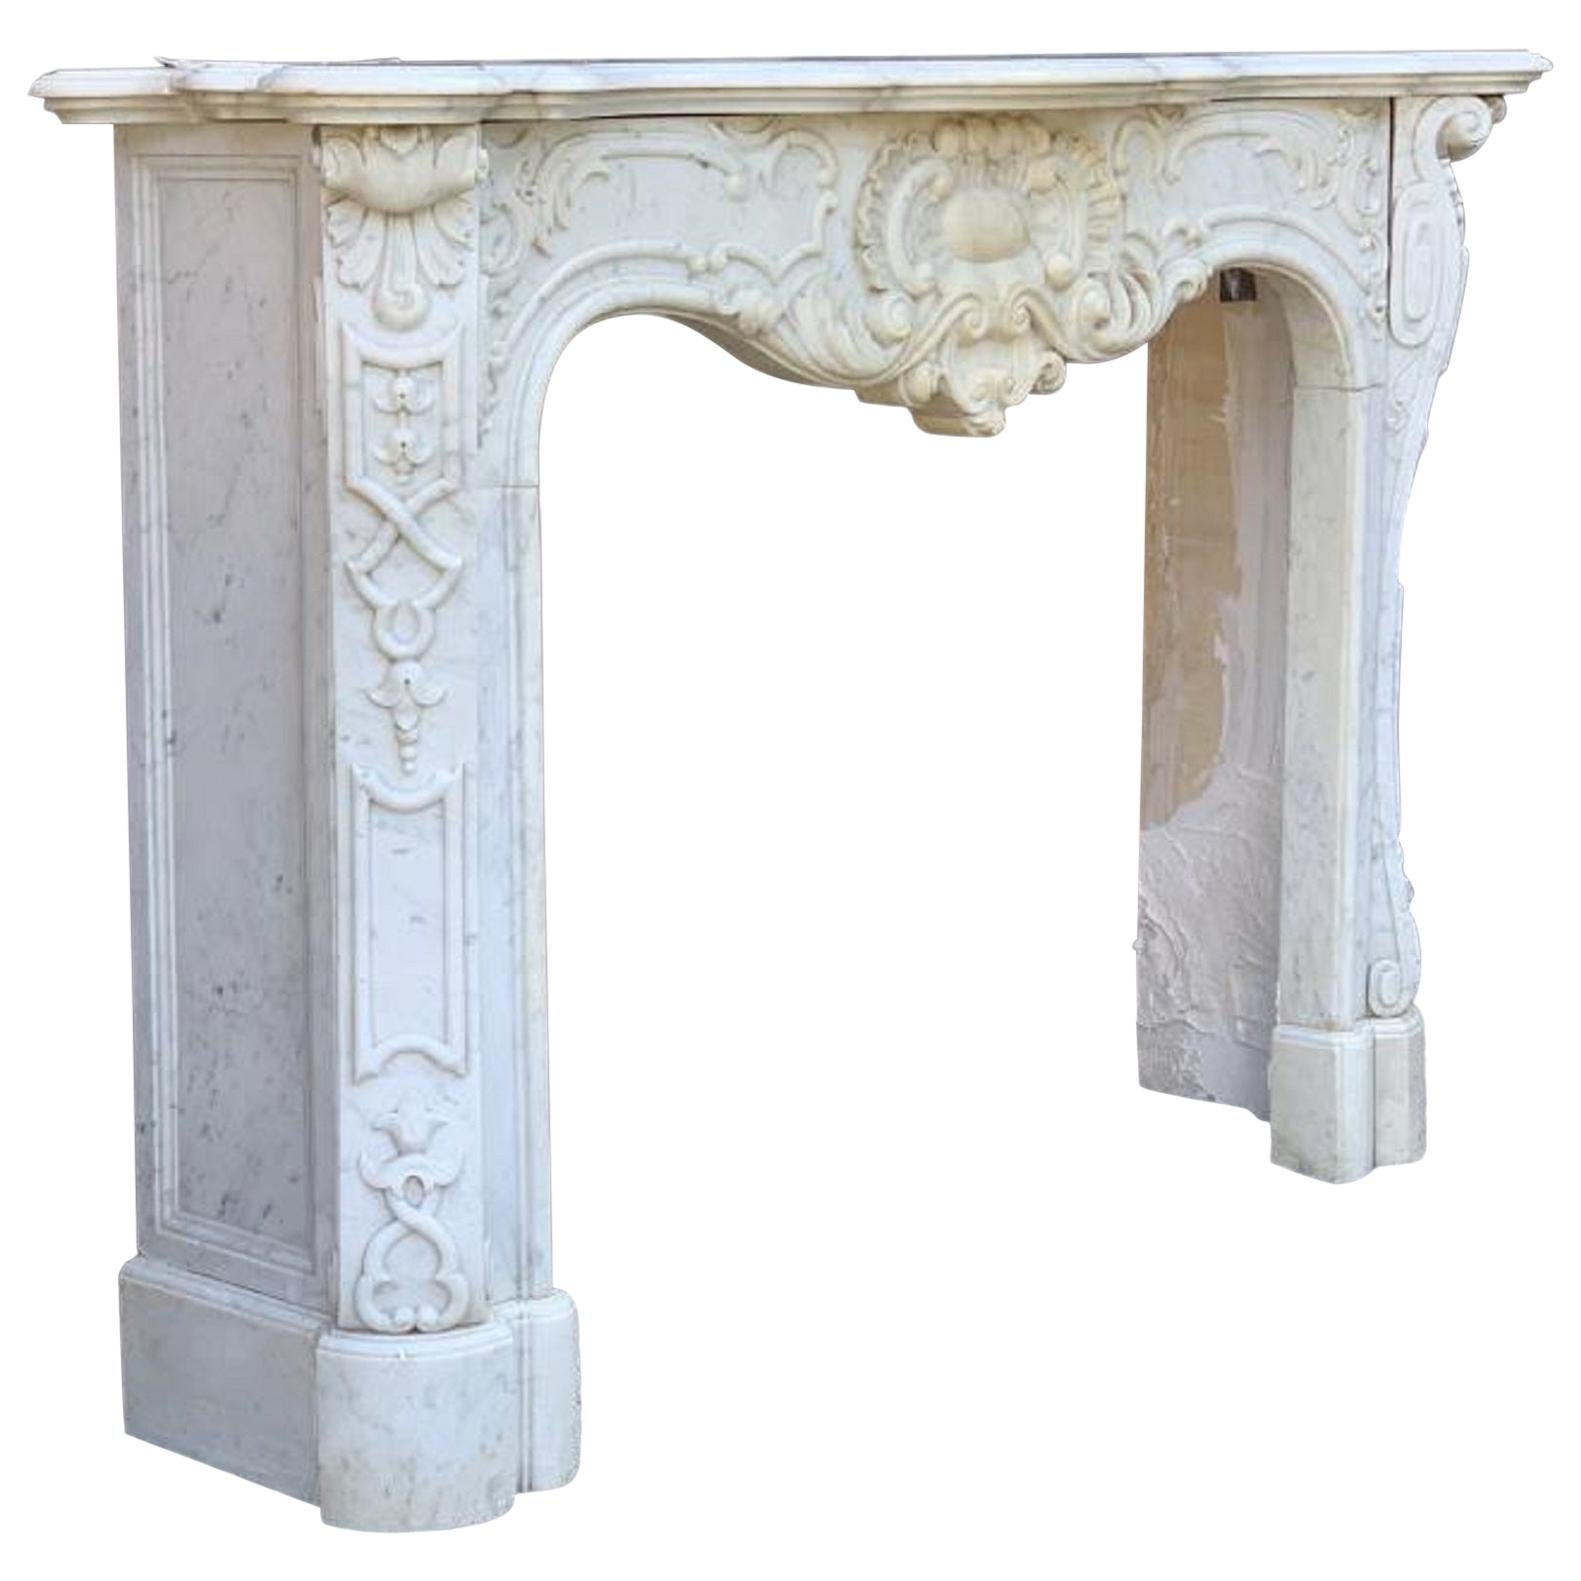 Carrara Marble Fireplace, Late 19th Century